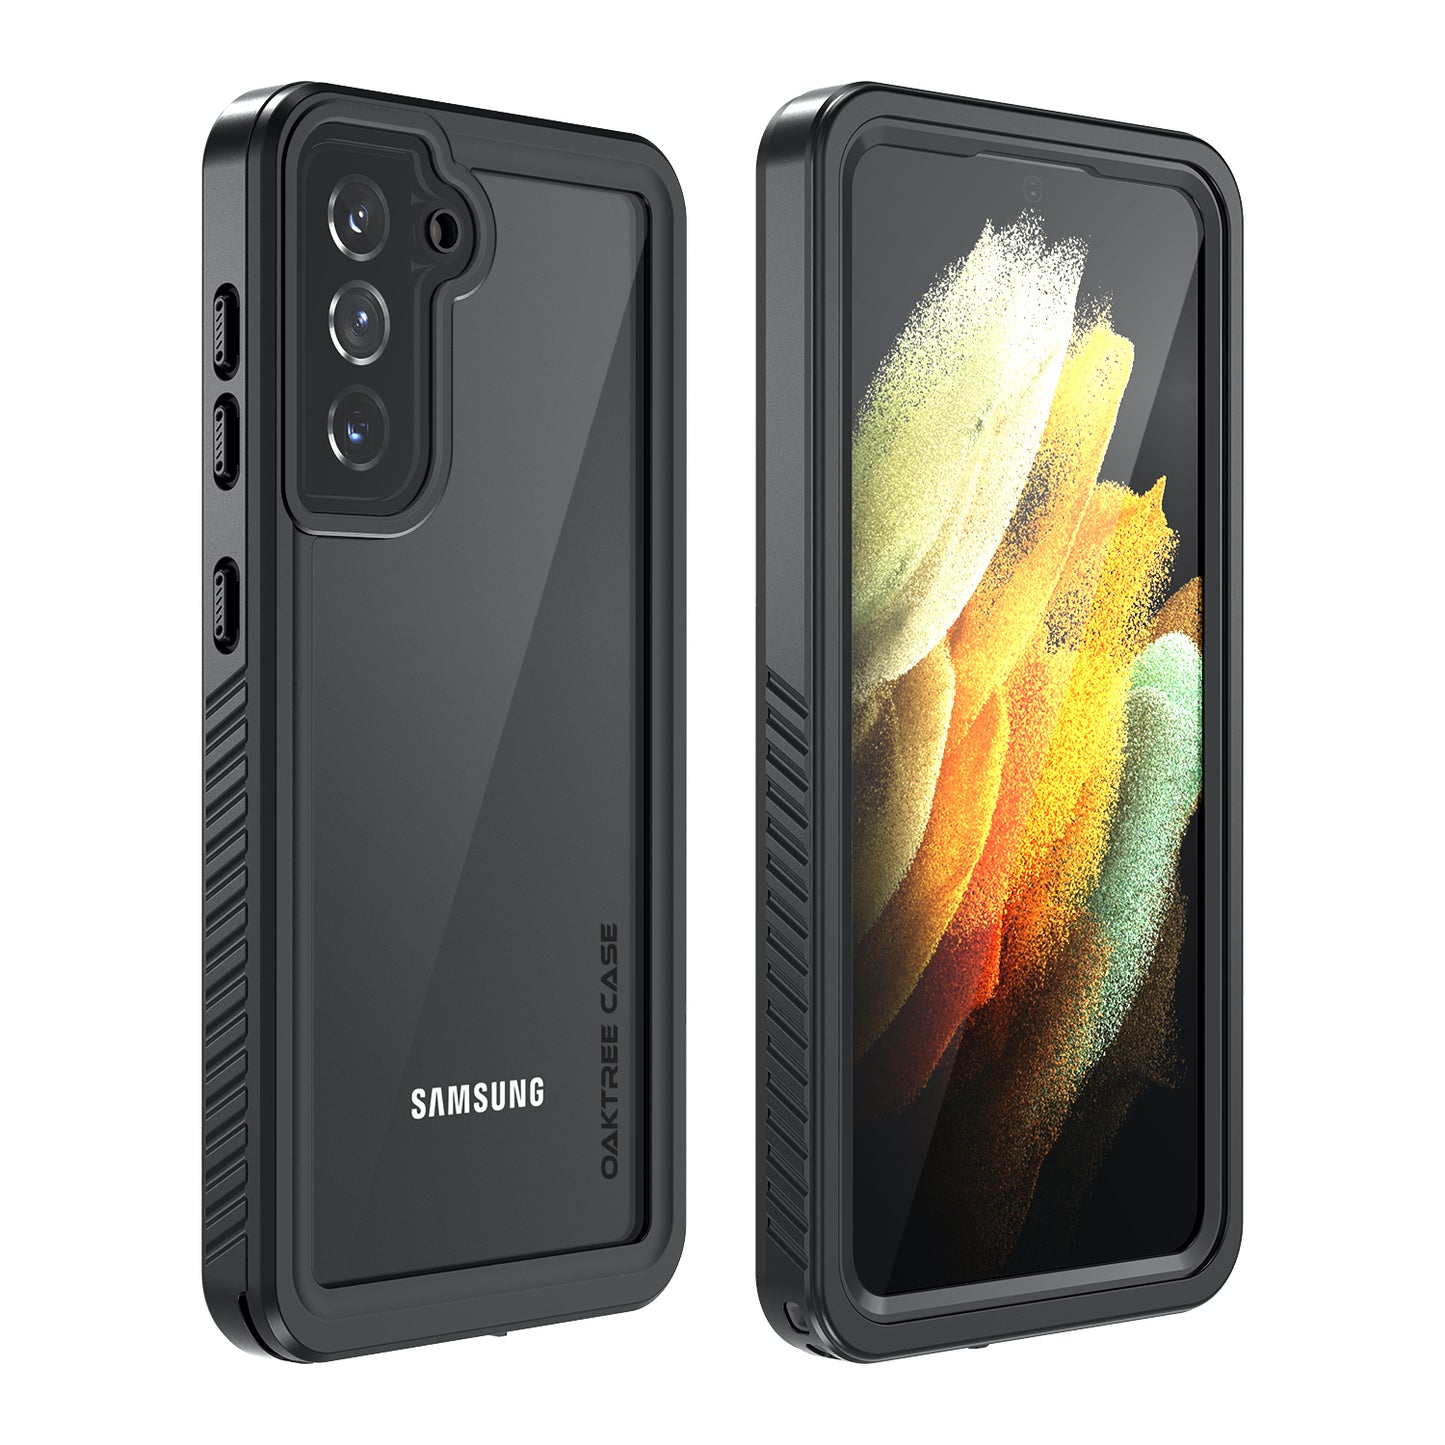 OAKTREE Samsung Galaxy S21 Shockproof Waterproof Rugged Case - Black/Clear